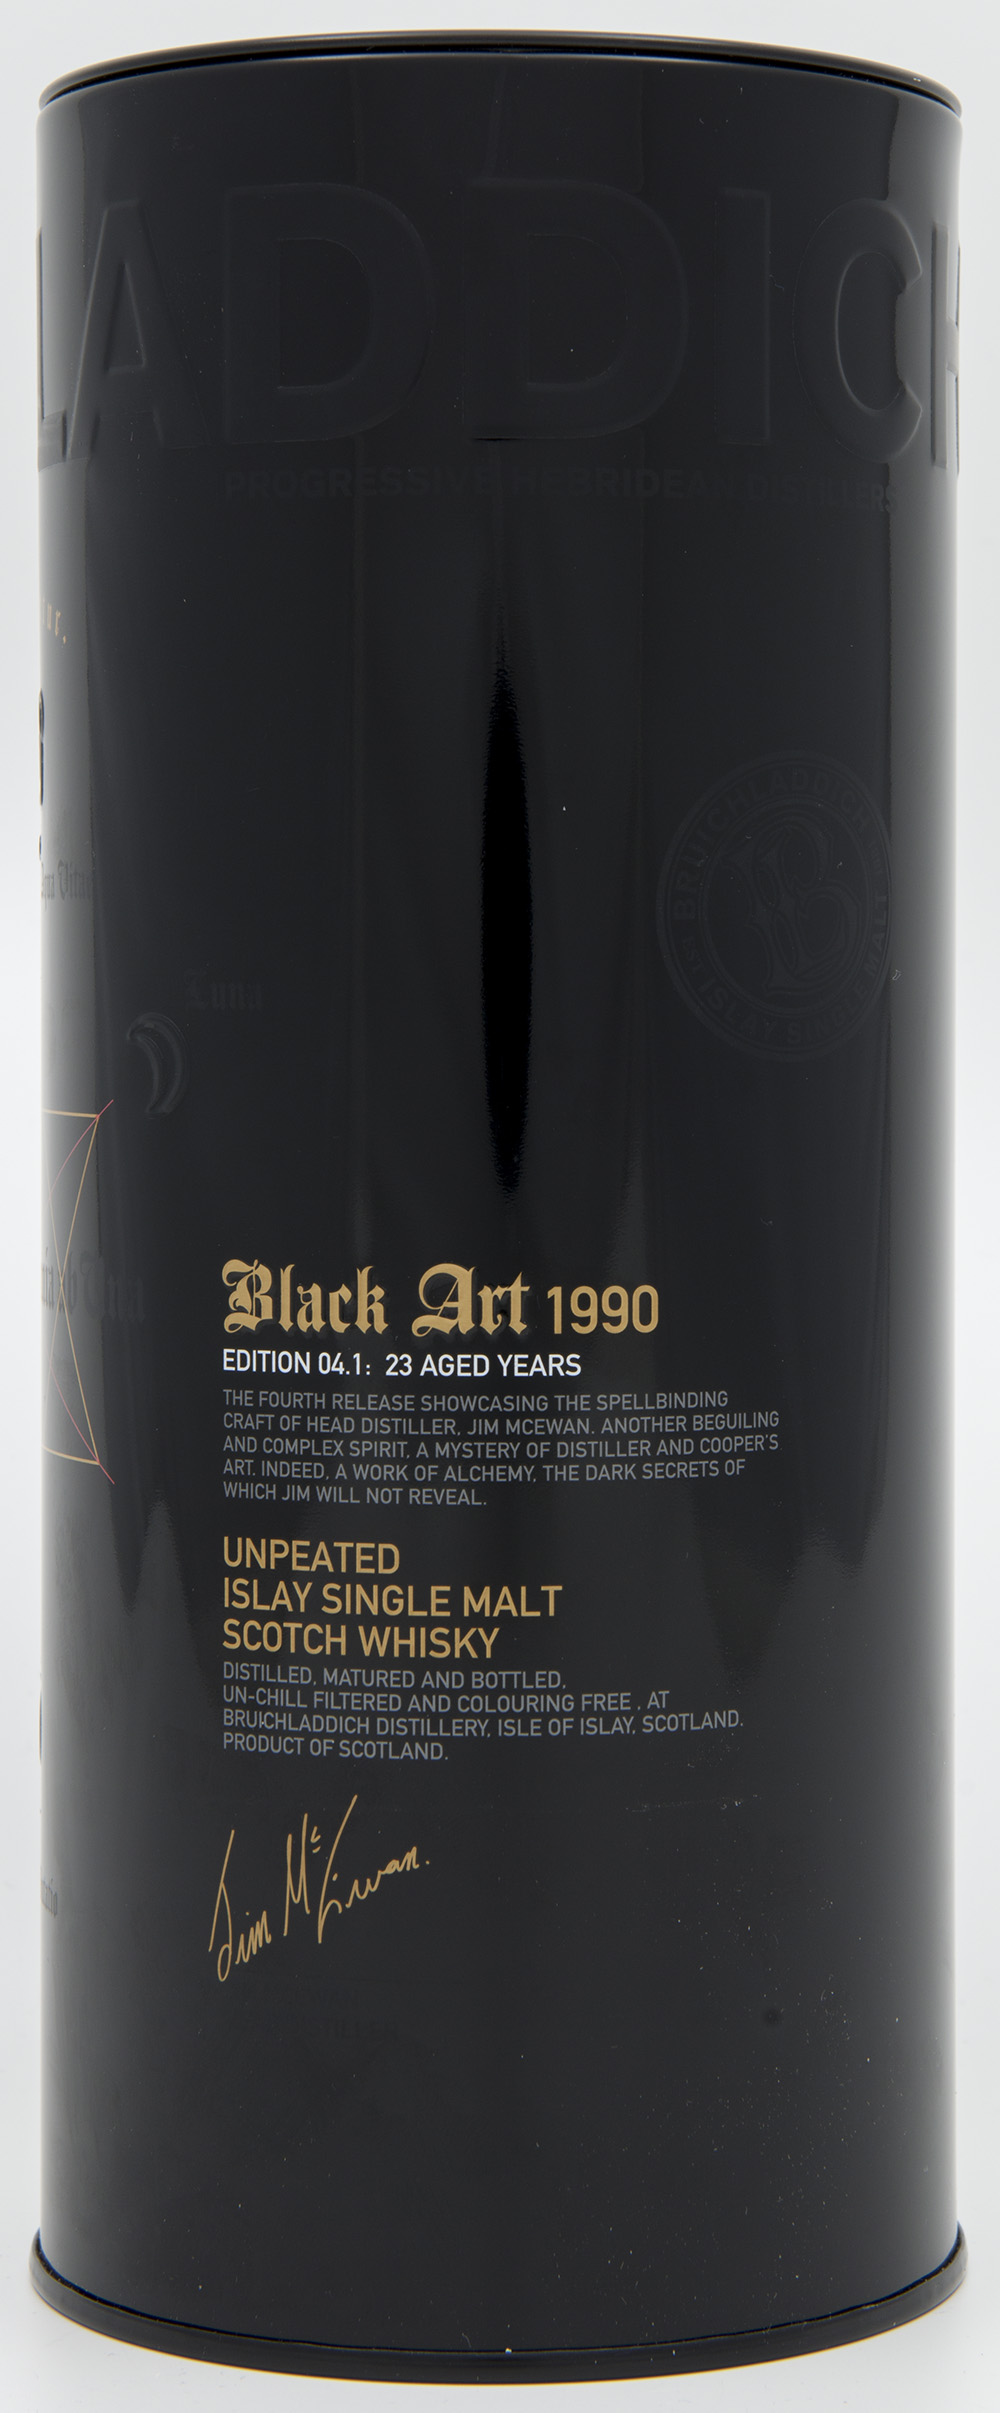 Billede: DSC_6181 - Bruichladdich Black Art 1990 - Edition 04.1 - 23 years - tube front.jpg